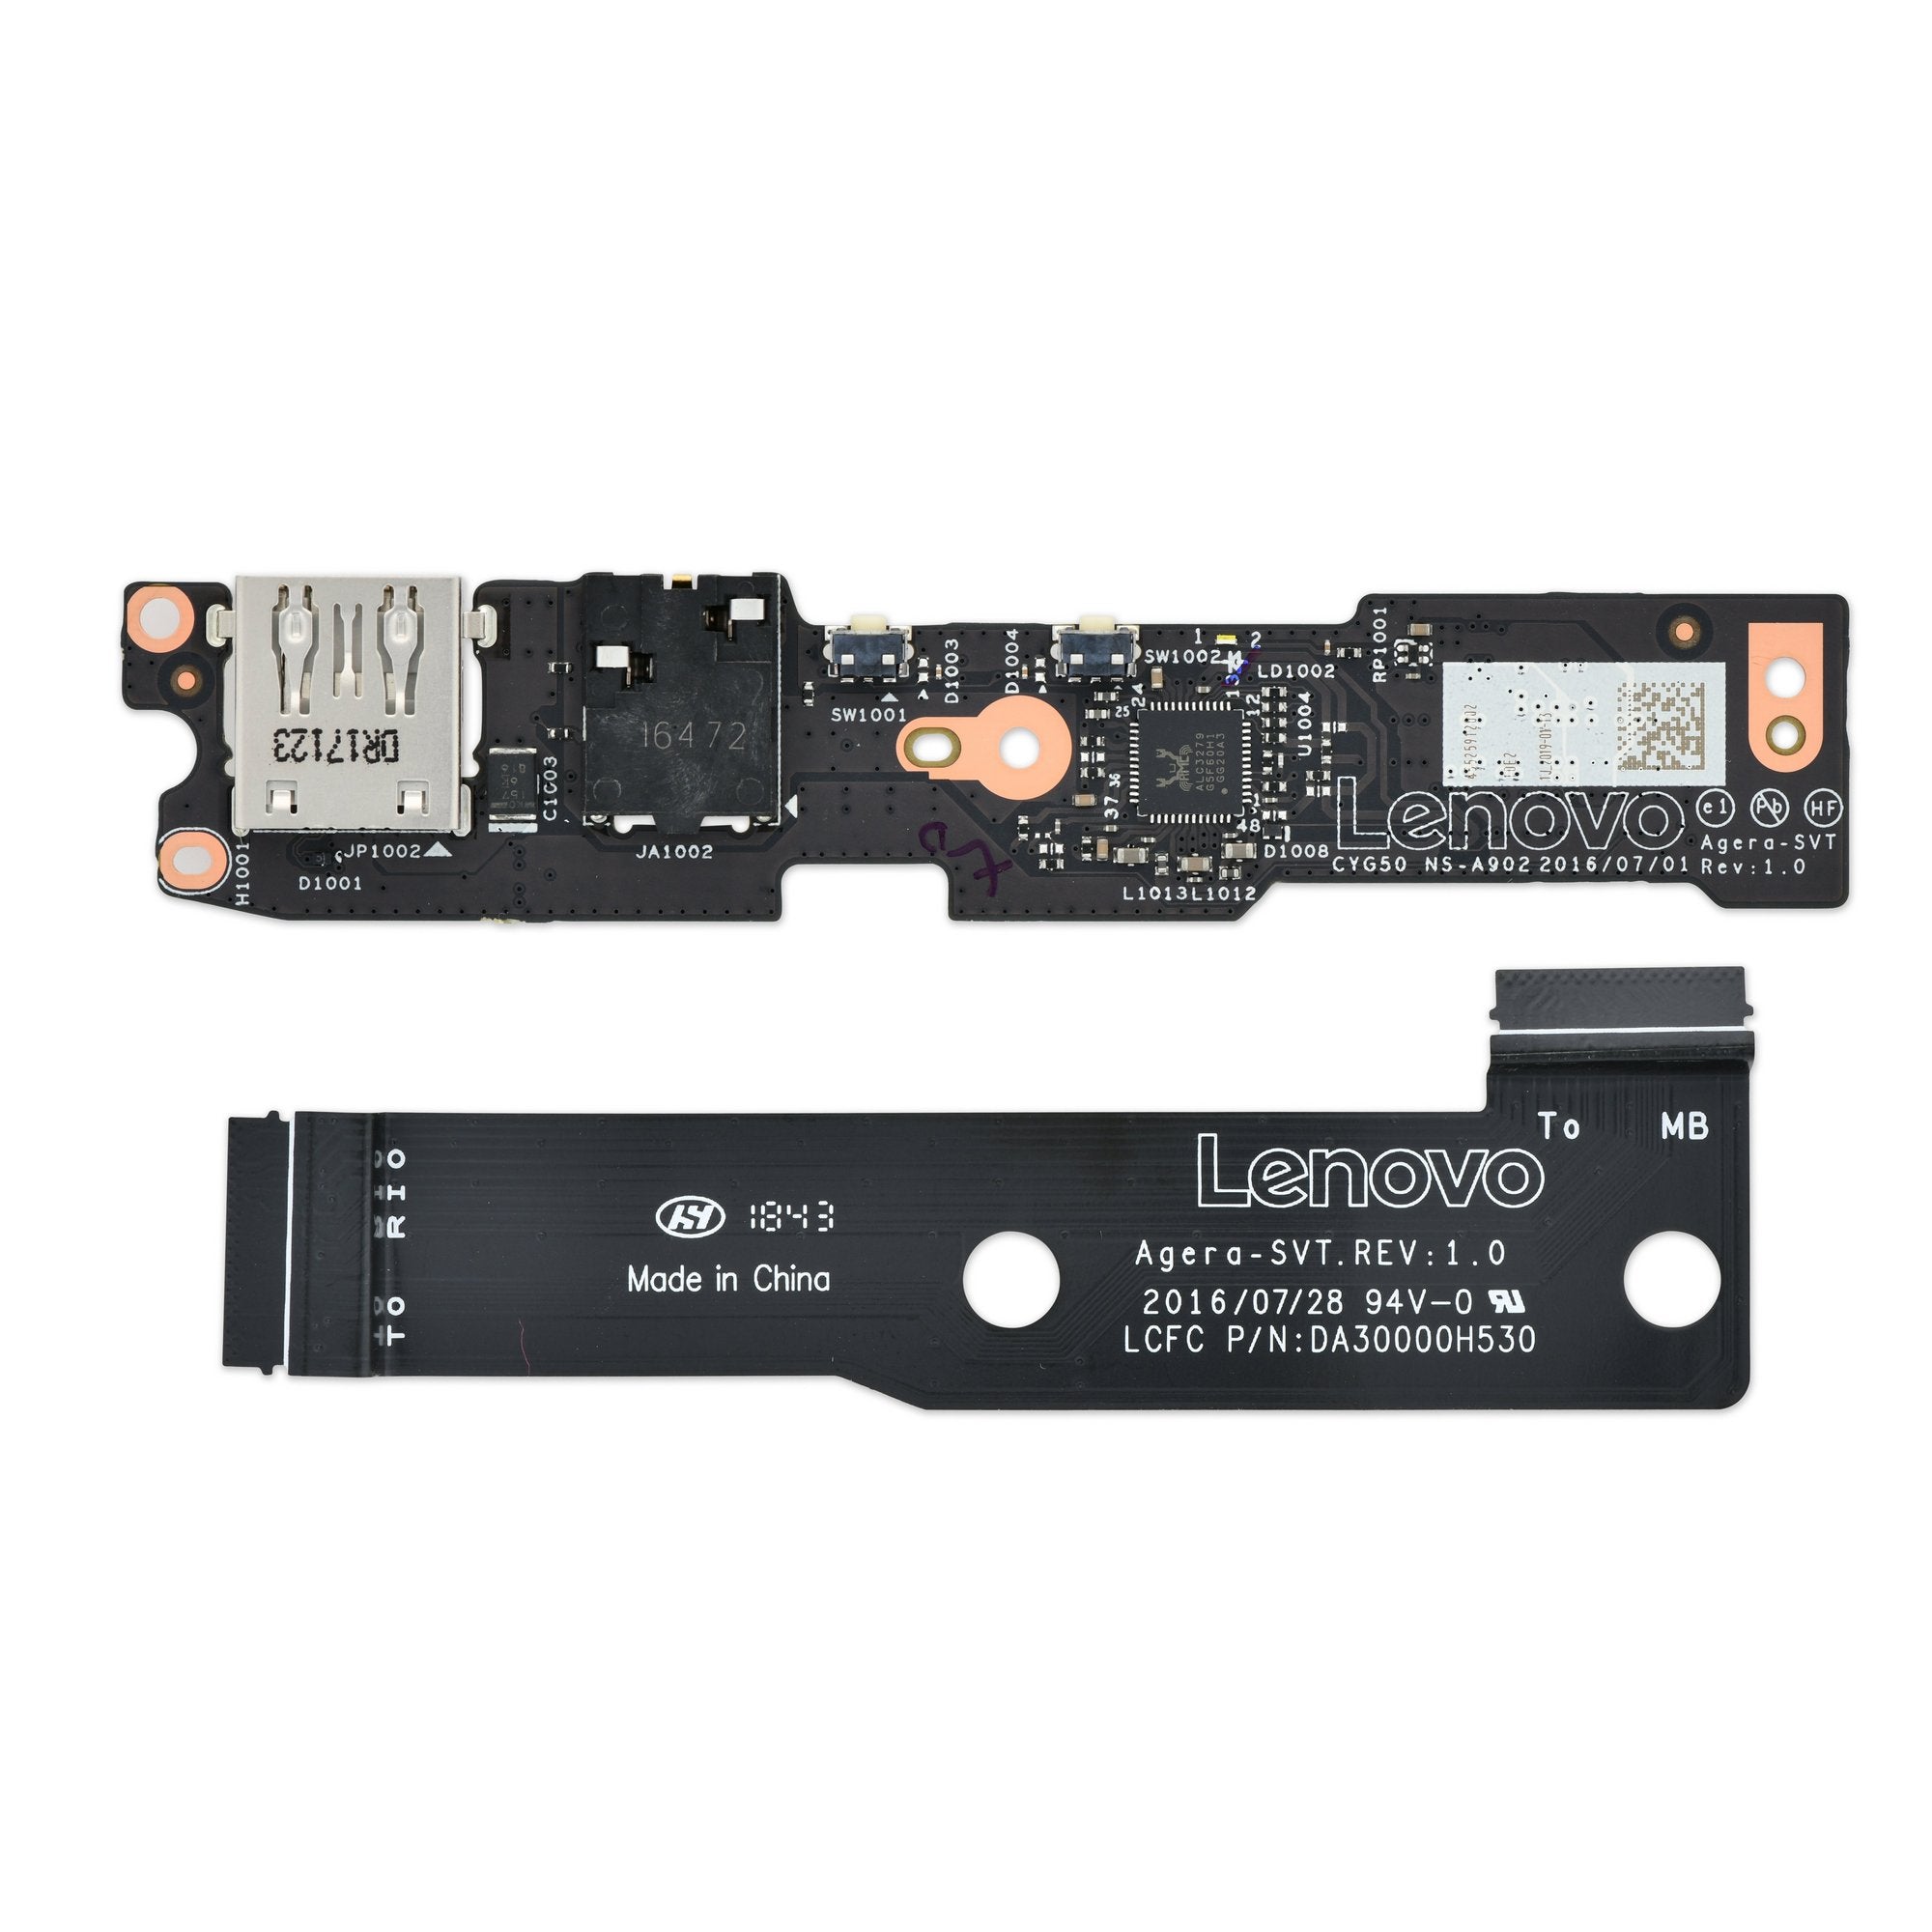 Lenovo Yoga 910 (13") USB Audio Power Board OEM